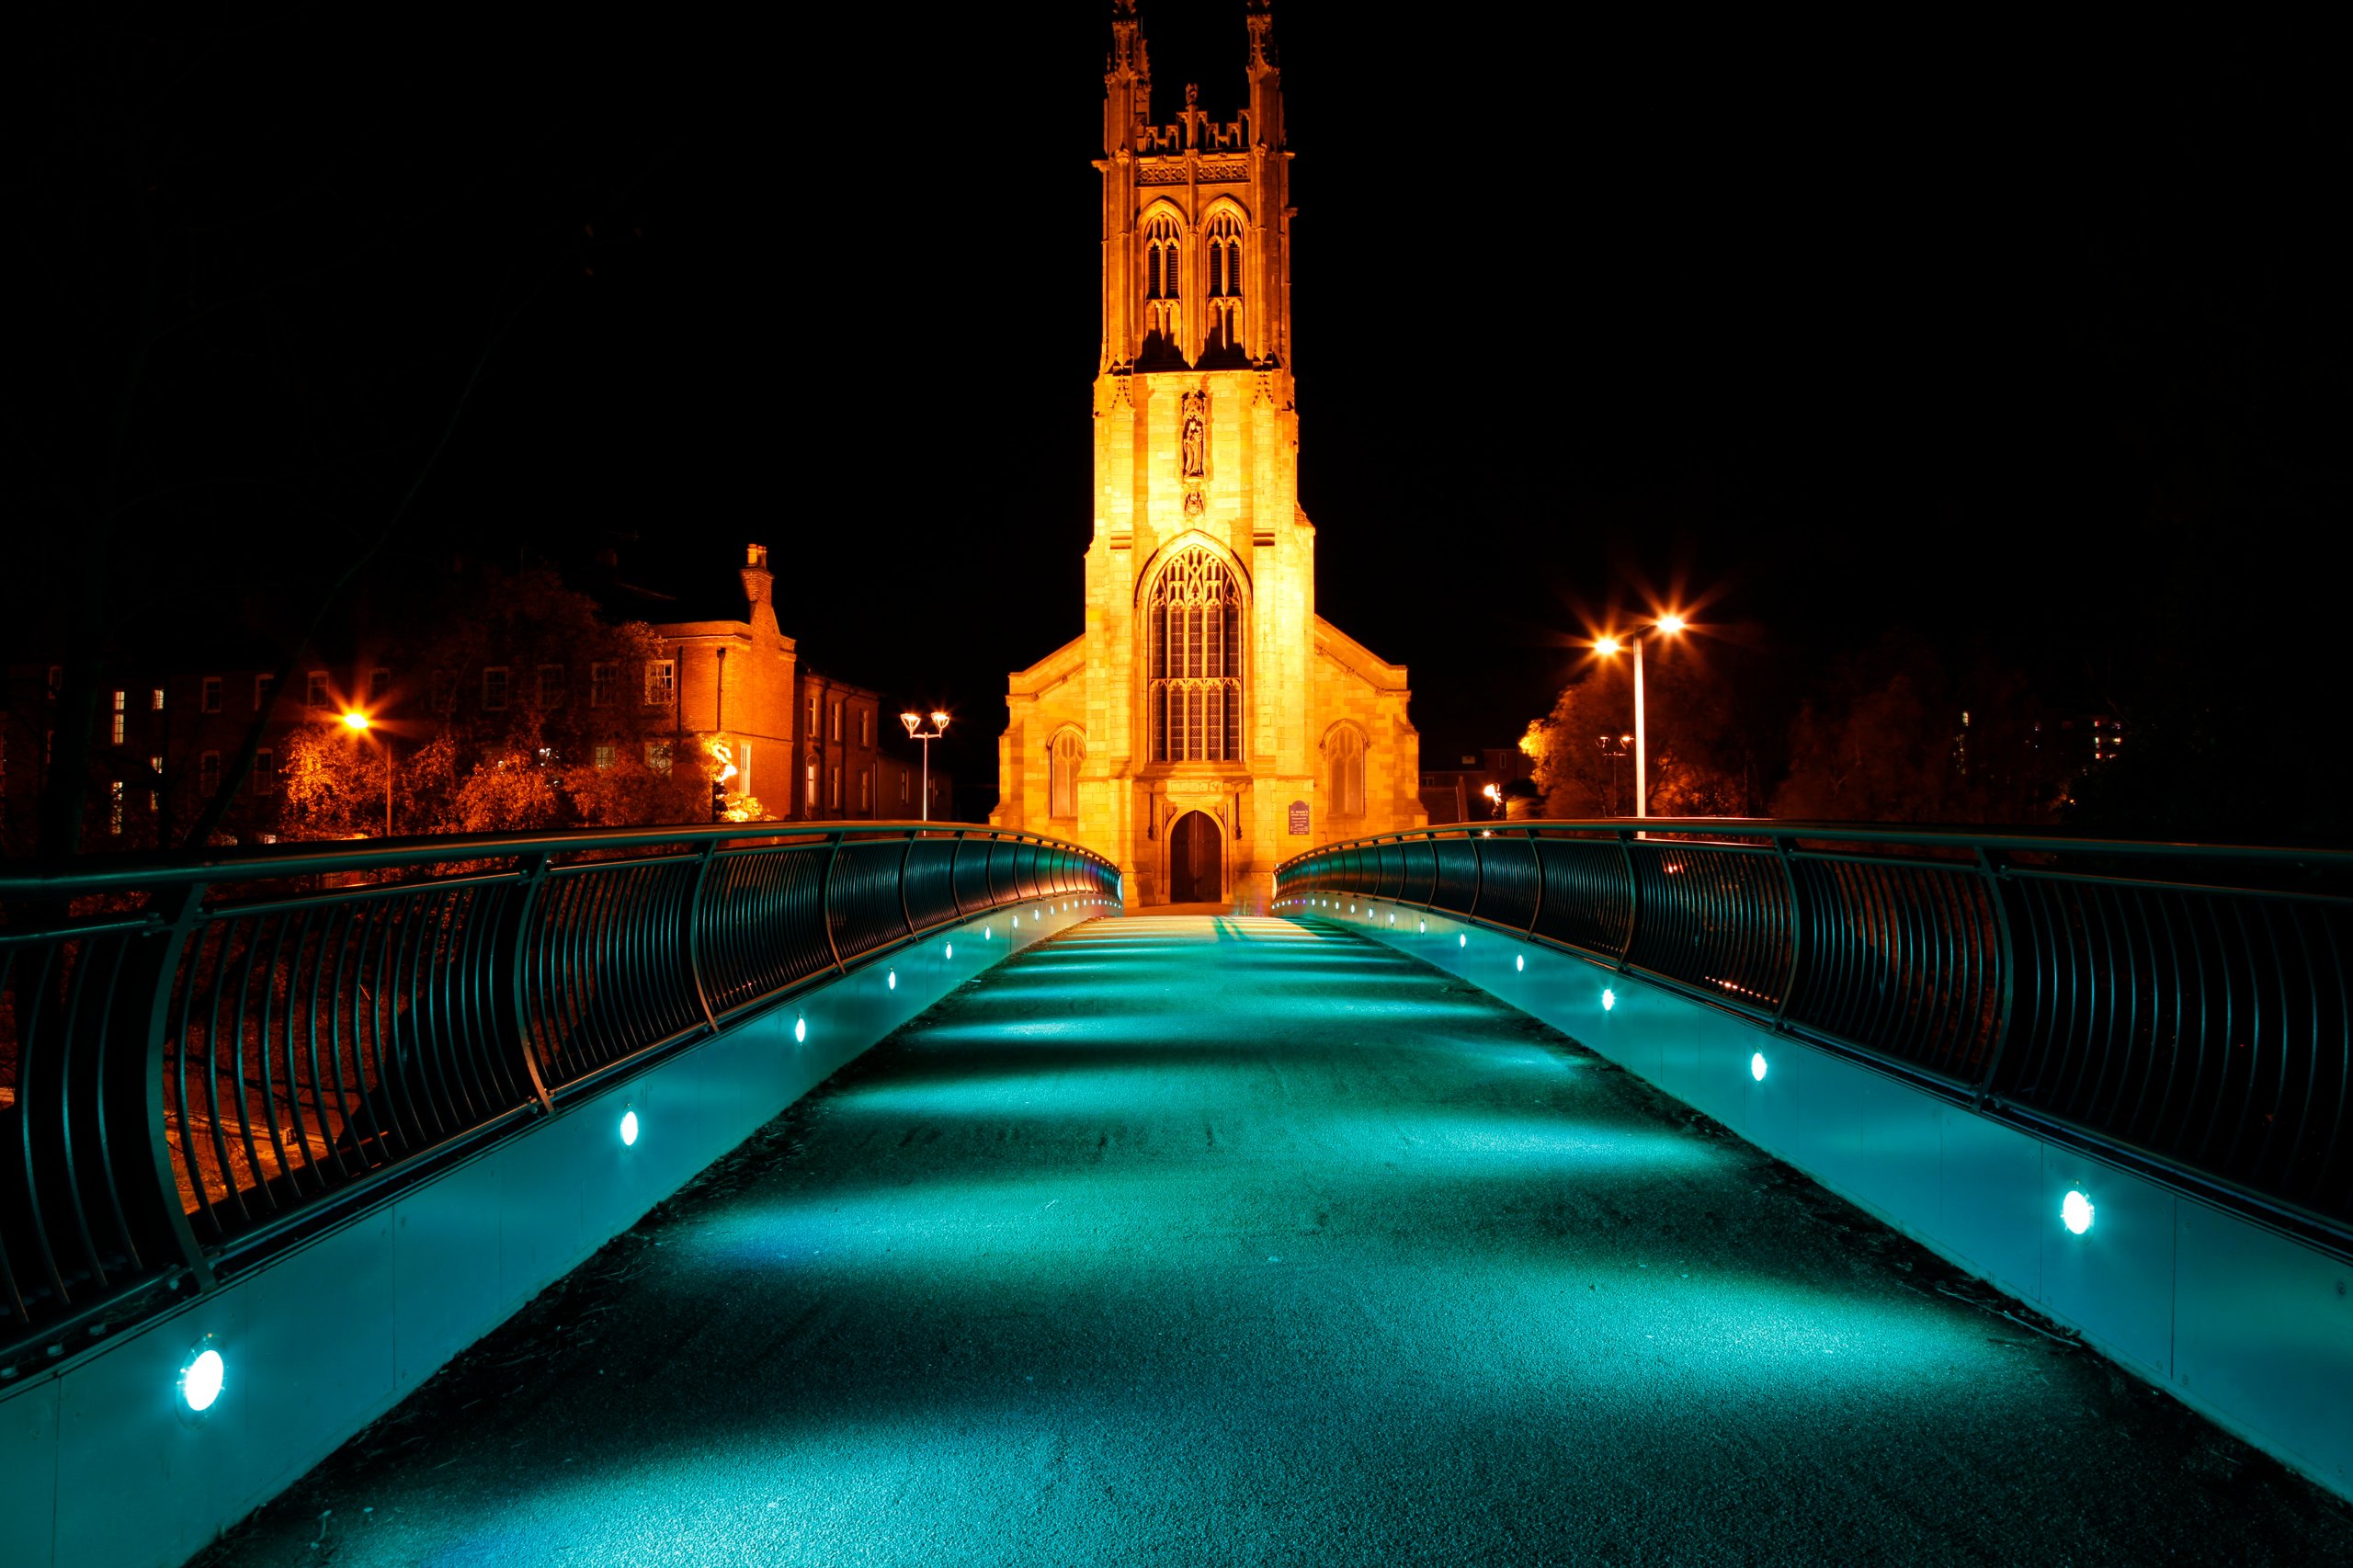 Bridge in Derby city centre at night